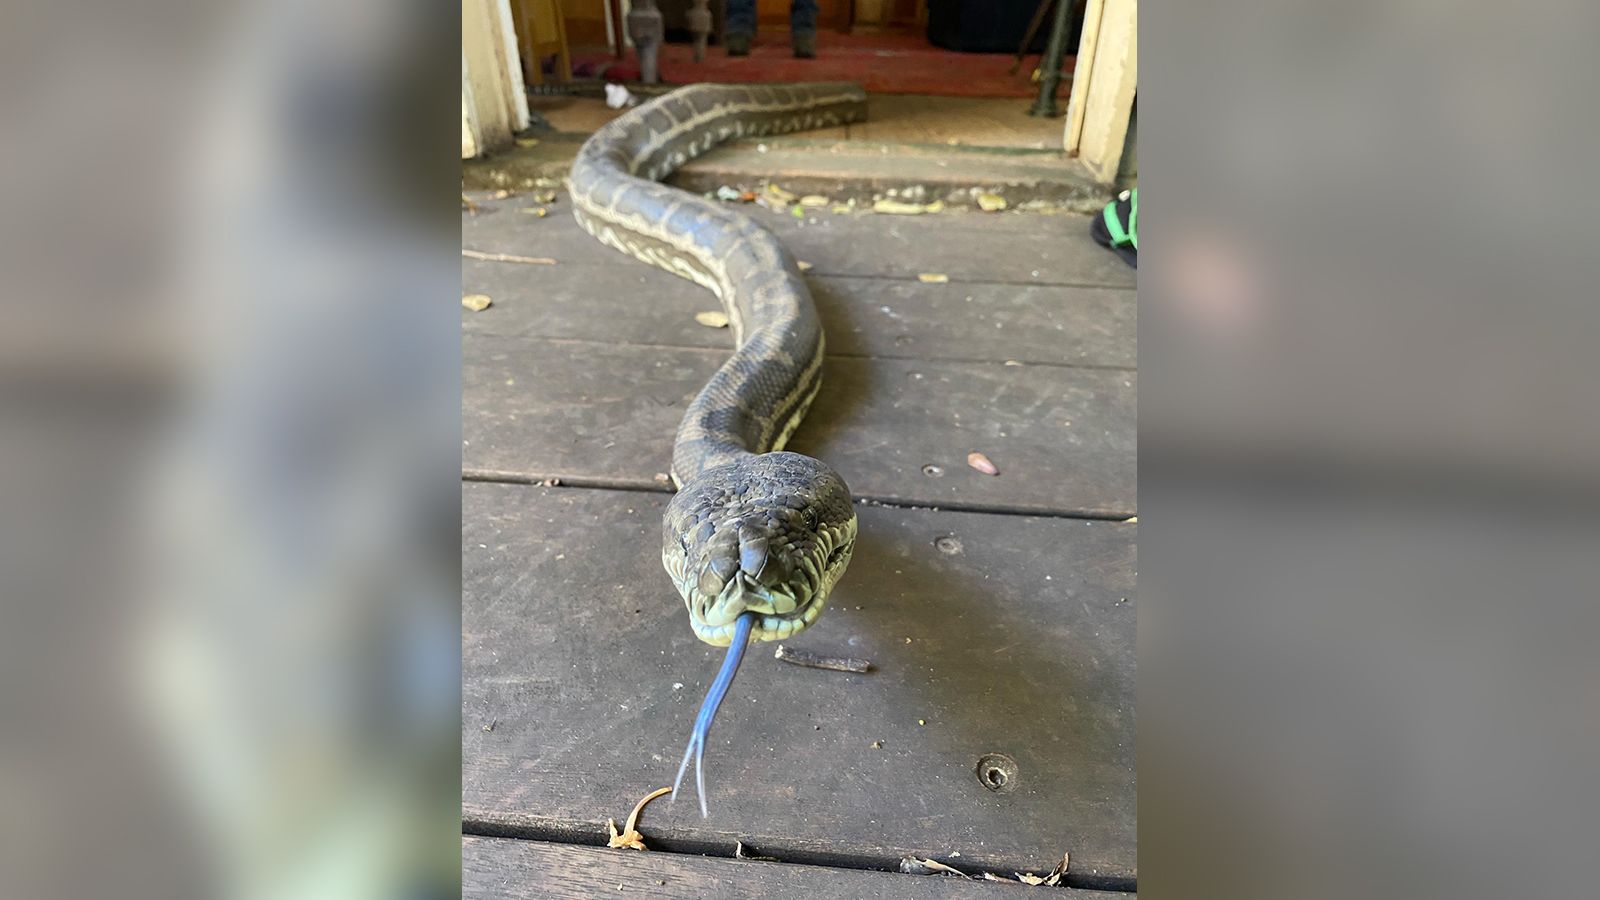 Huge carpet pythons fall through kitchen ceiling in Australia | CNN